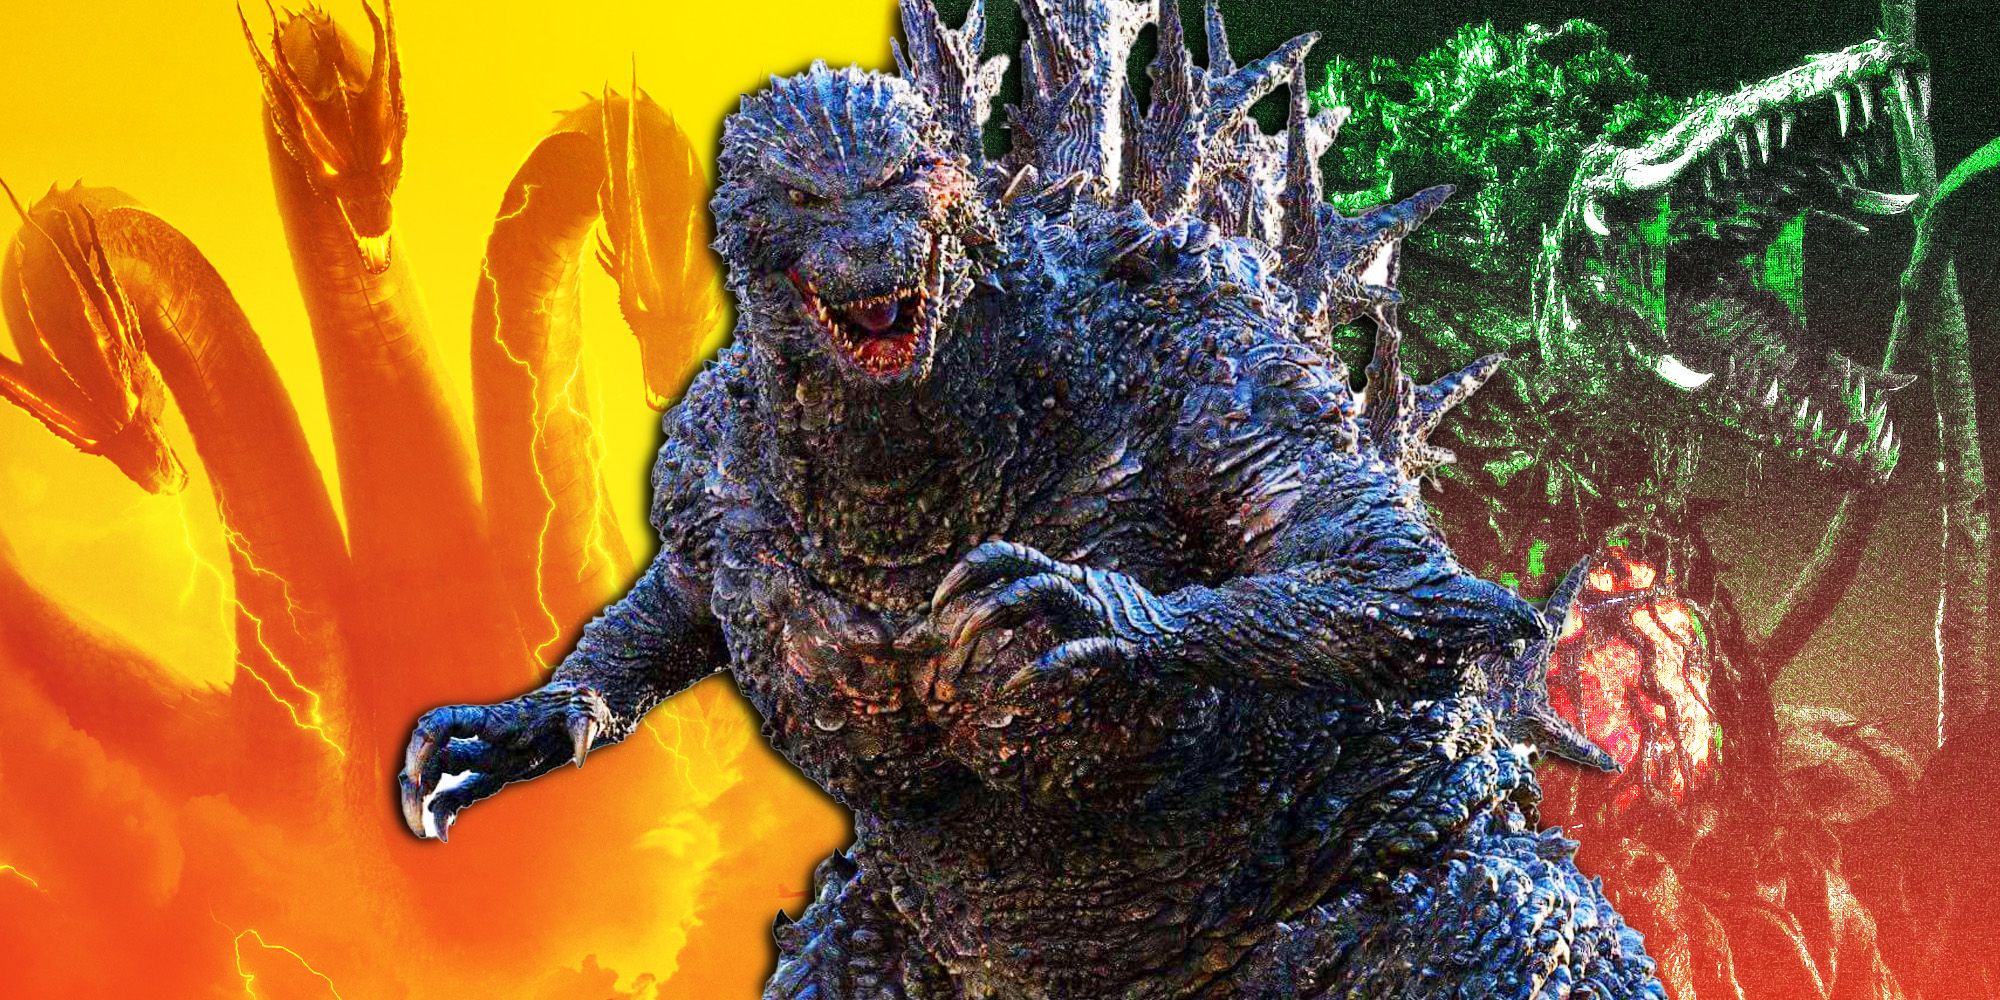 Godzilla from Godzilla Minus One and Ghidorah and Biollante